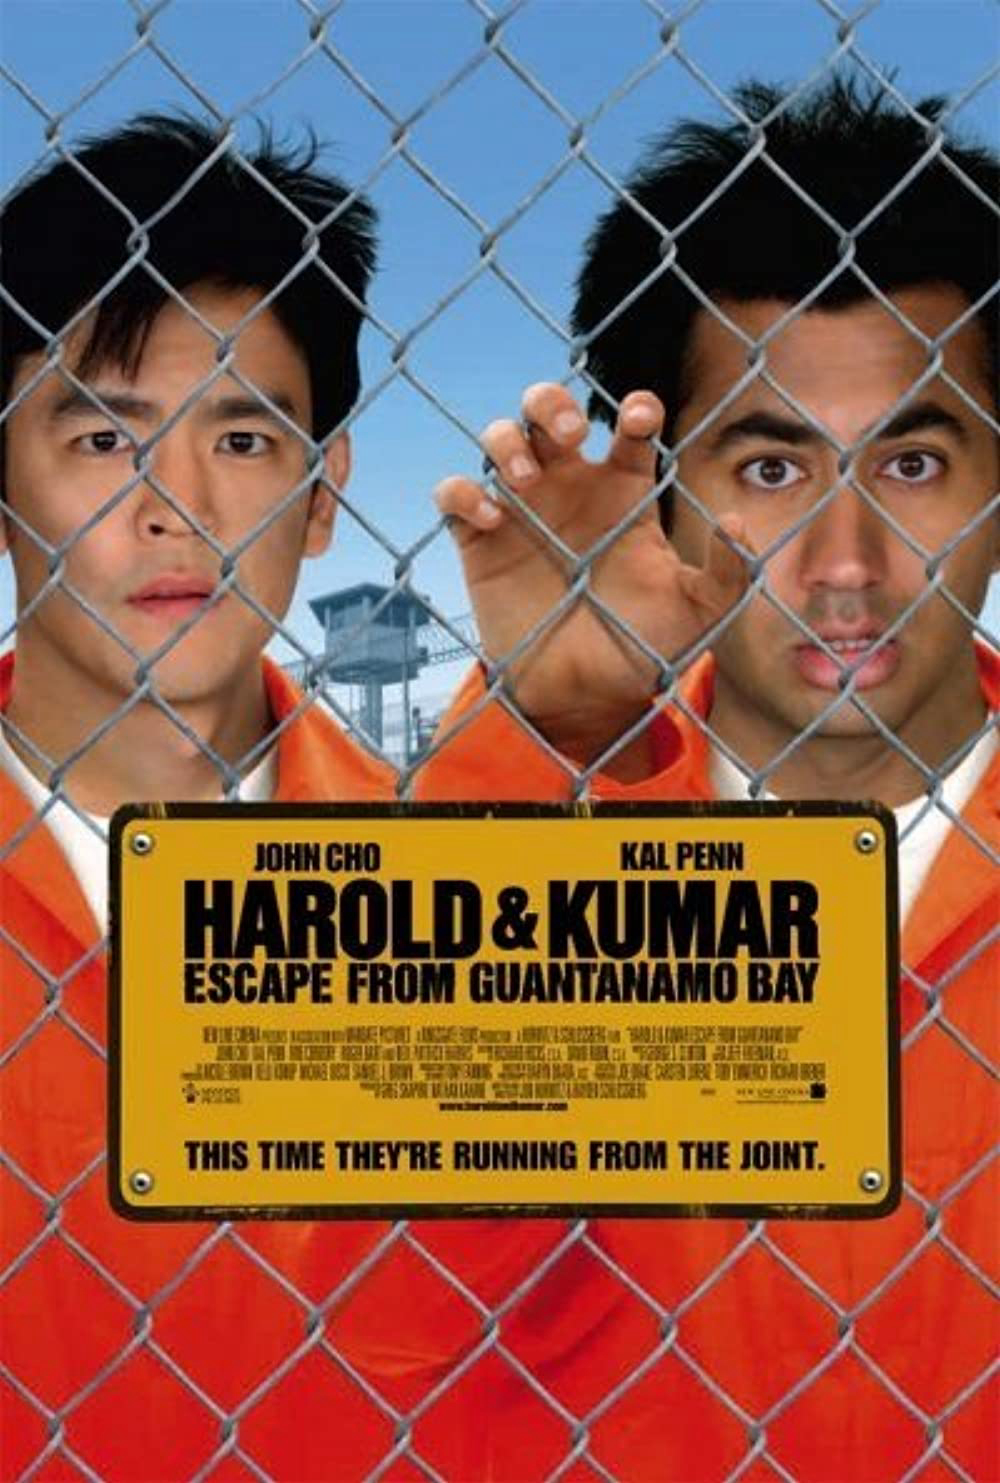 Xem Phim Harold & Kumar Thoát Khỏi Ngục Guantanamo (Harold & Kumar Escape from Guantanamo Bay)